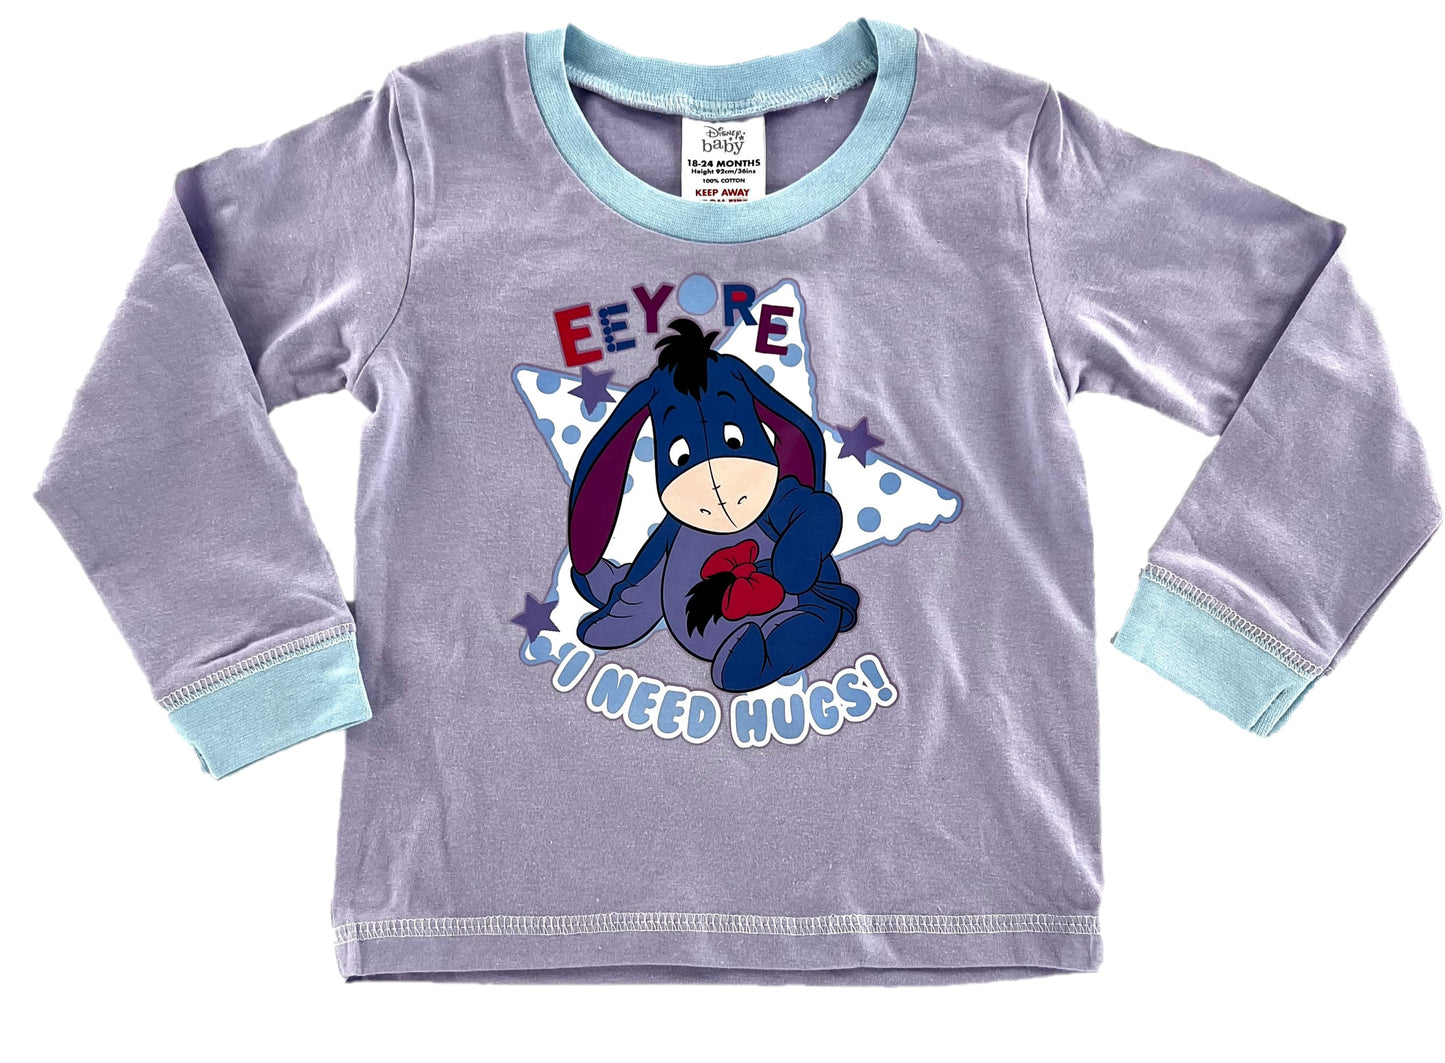 Disney Eeyore Girl’s Pyjamas 6-24 Months Available, Gift Idea, “I Need Hugs!”